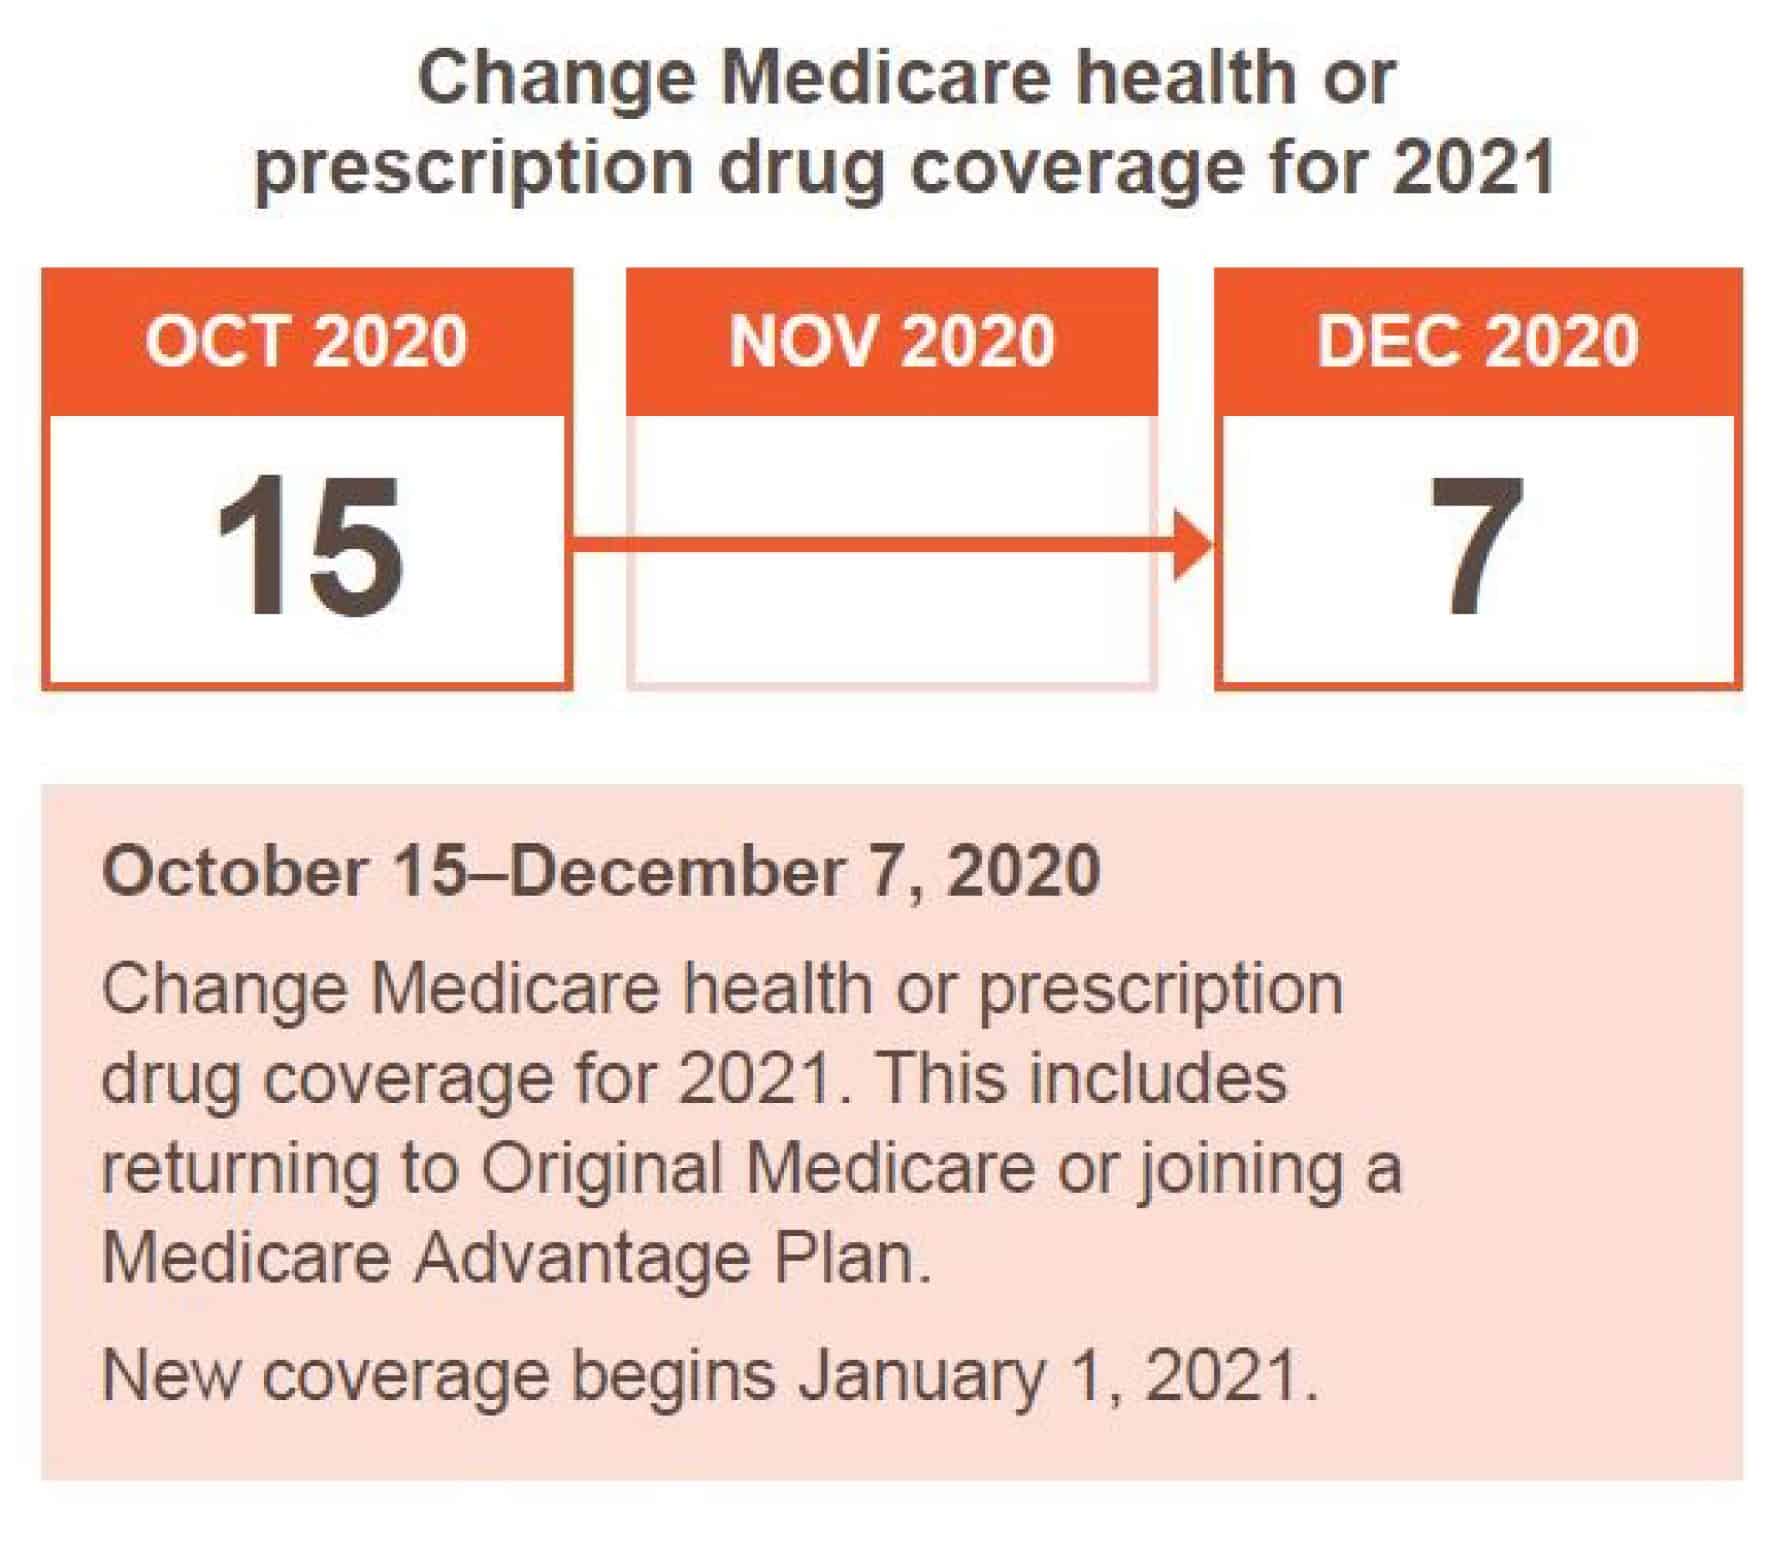 When to change Medicare health or prescription drug coverage for 2021